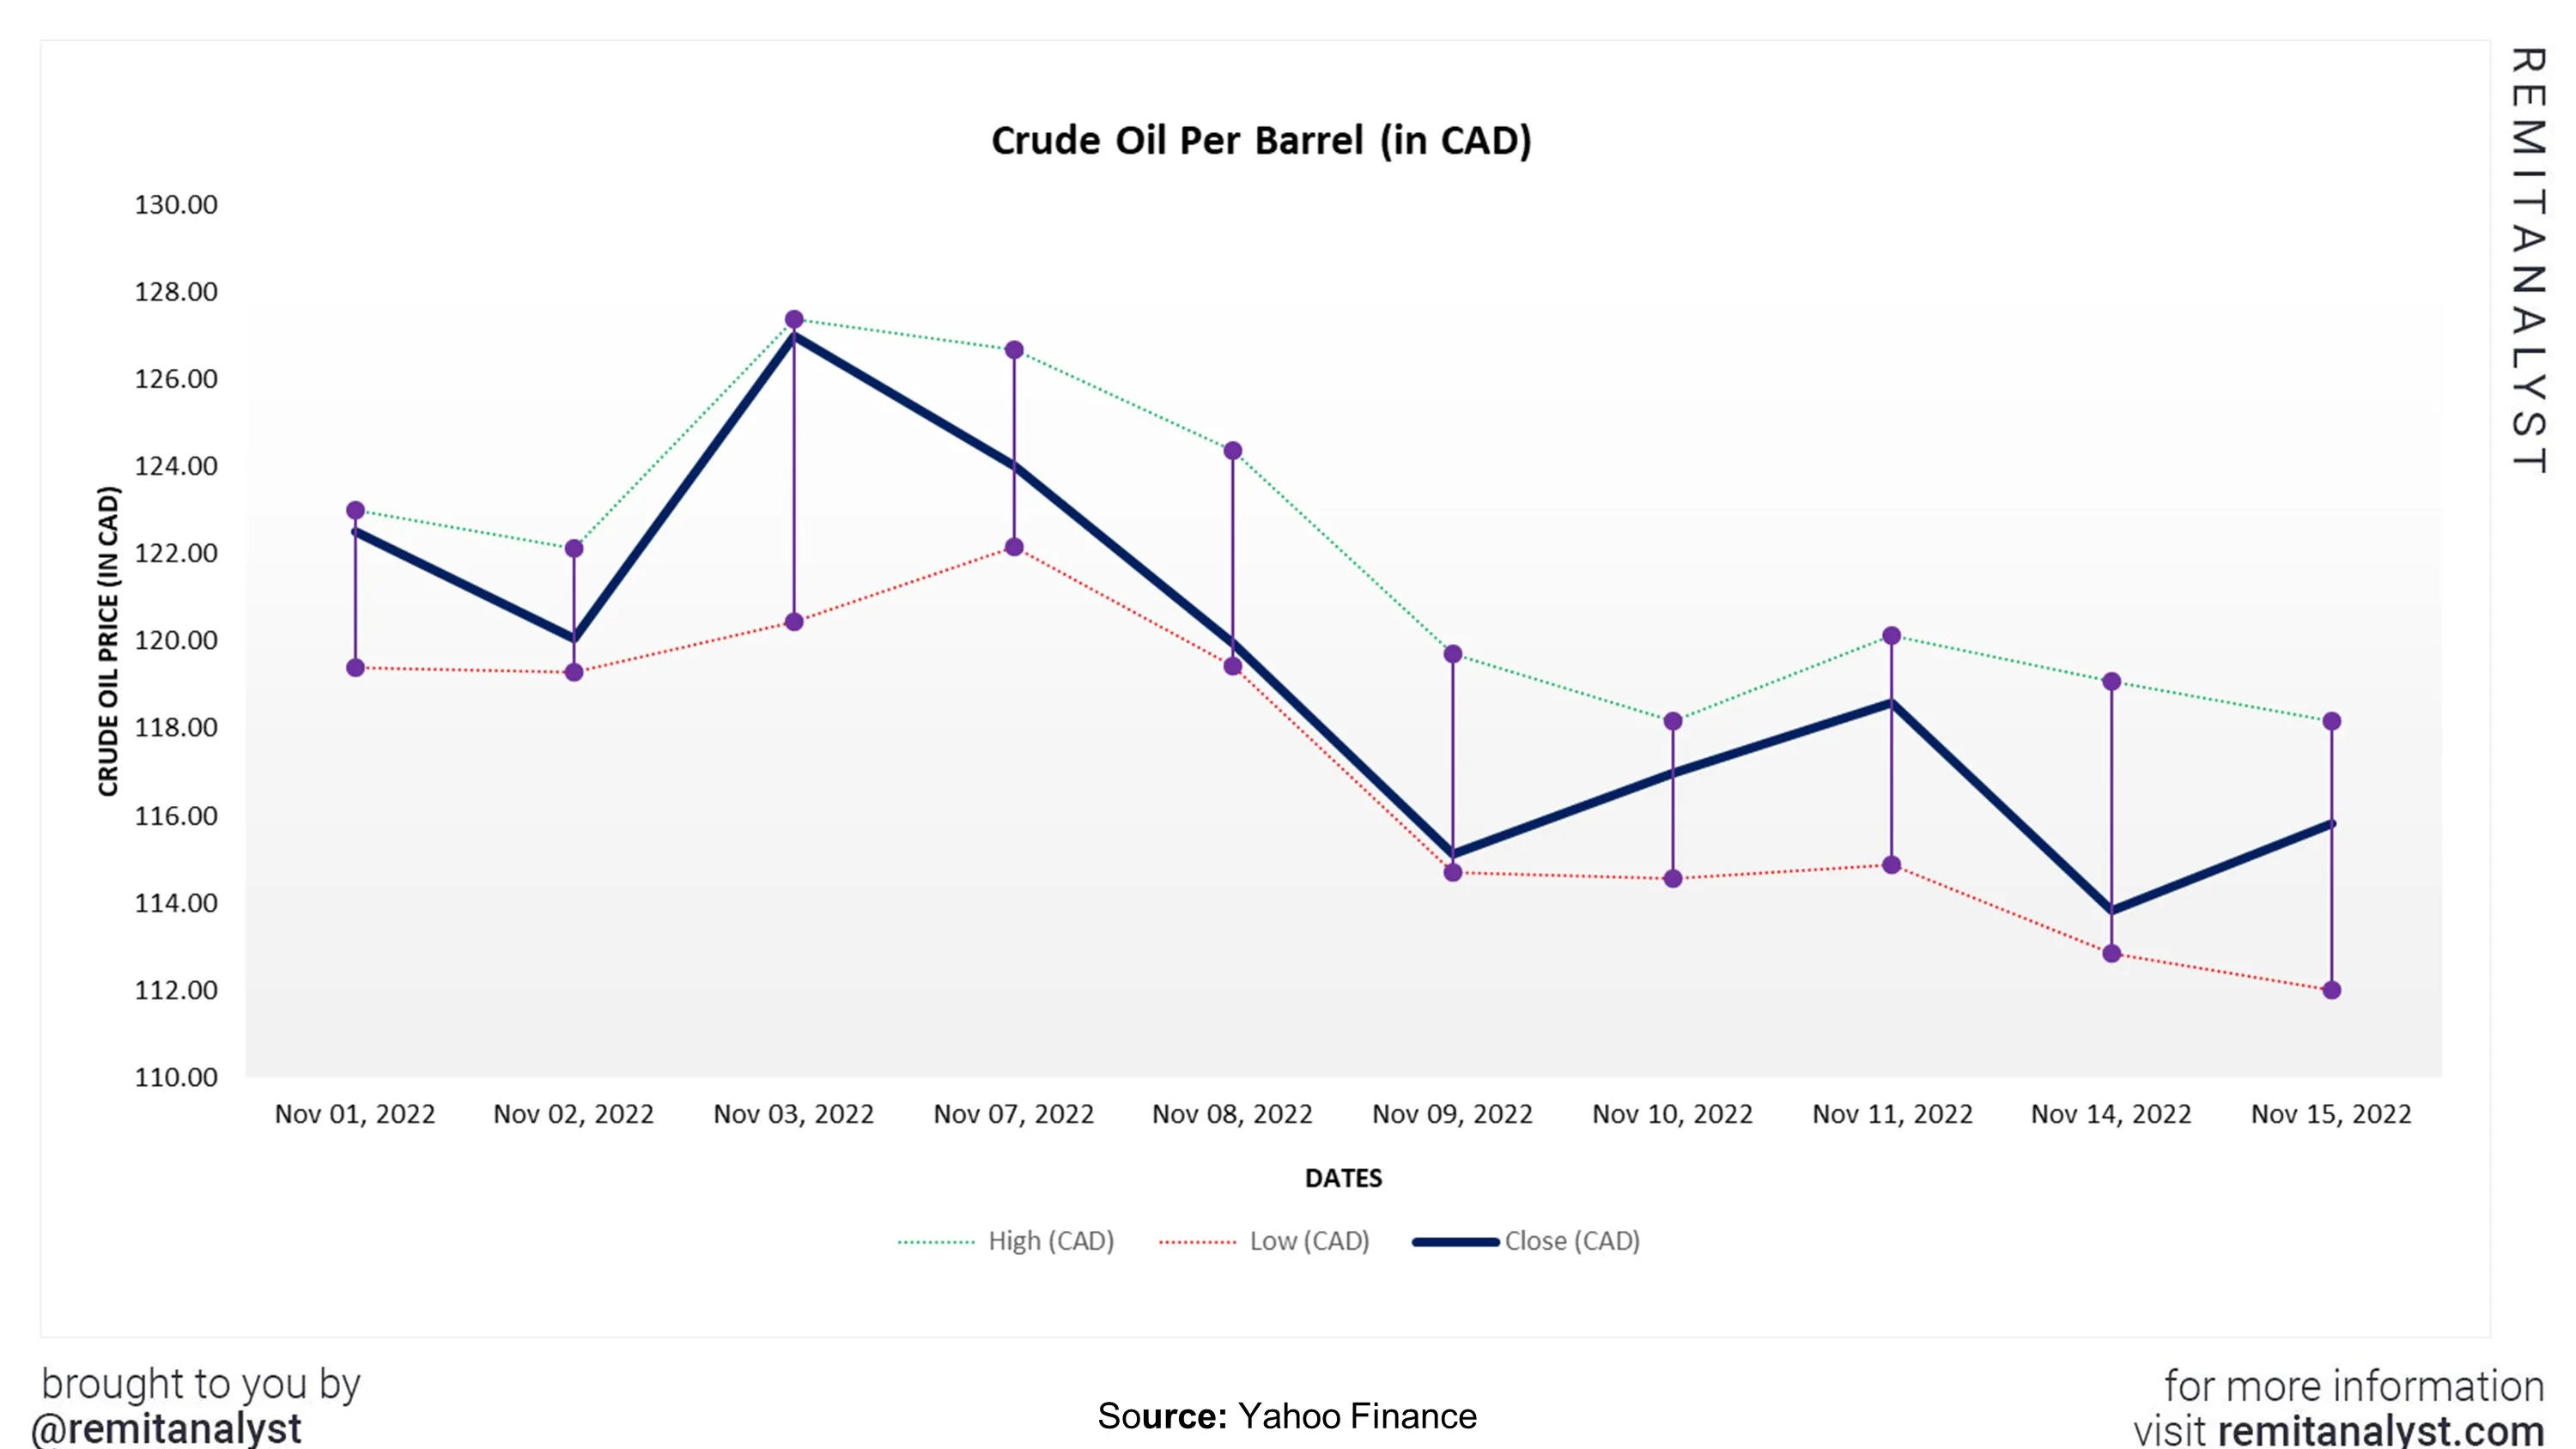 crude-oil-prices-canada-from-1-nov-2022-to-15-nov-2022